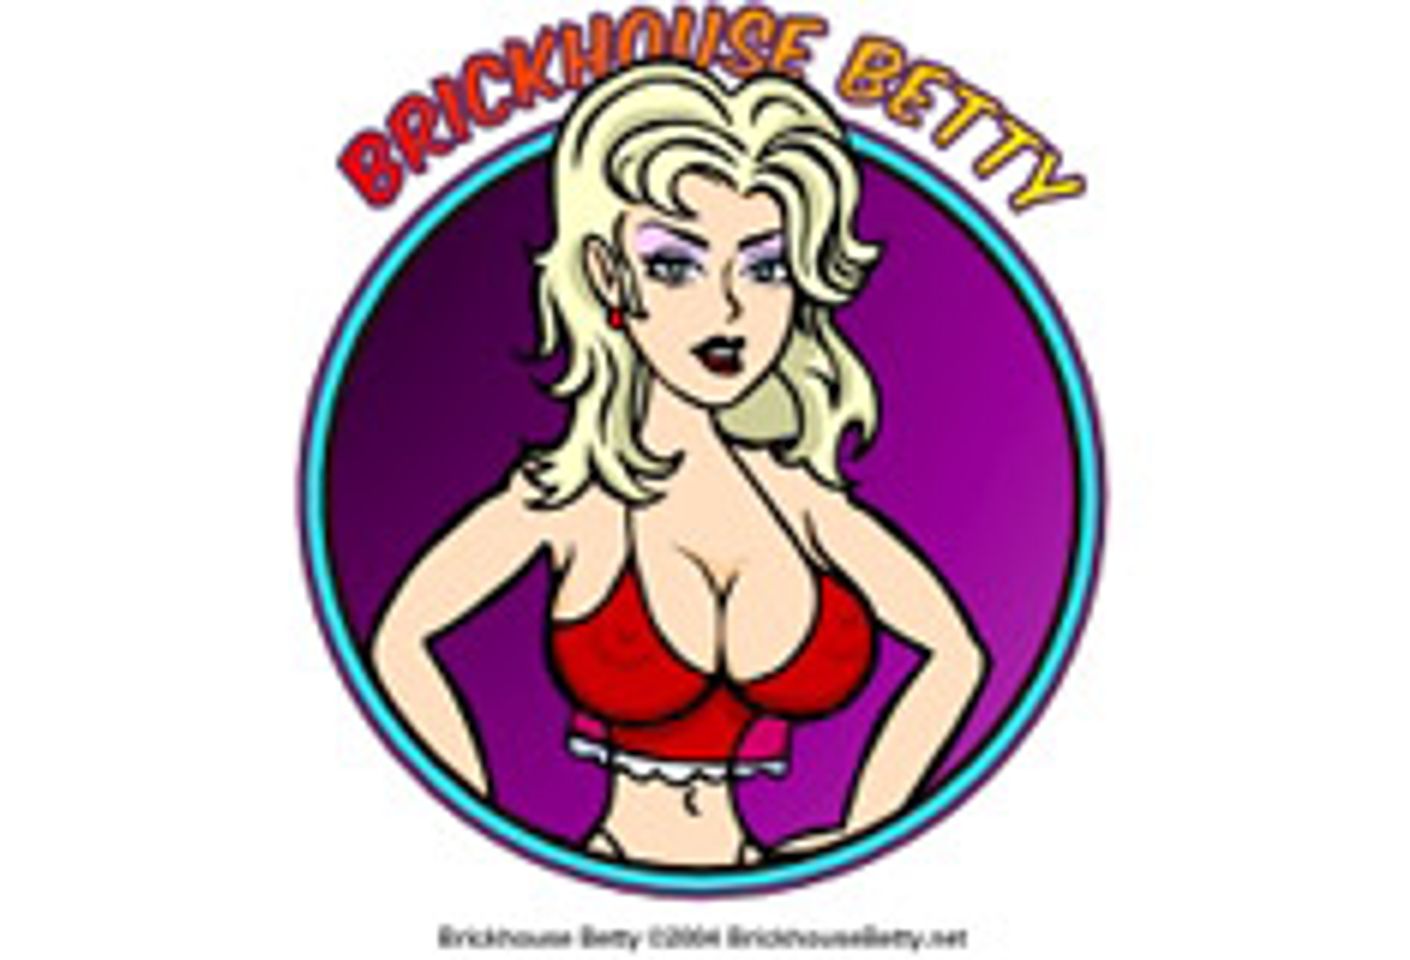 Adult Cartoon Star Brickhouse Betty Gets a Website